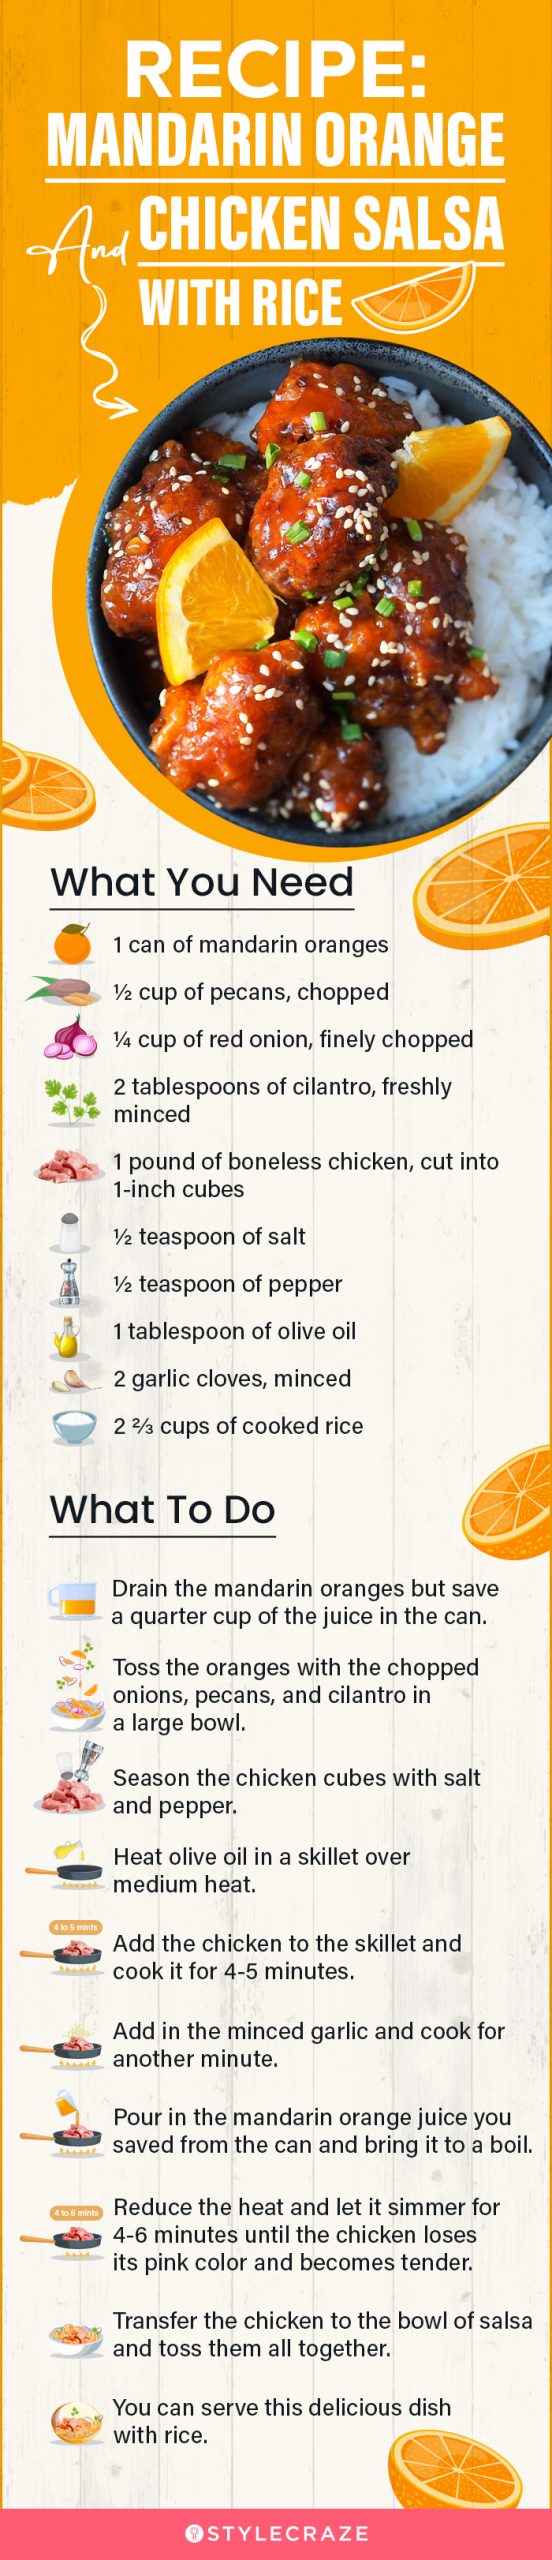 mandarin orange and chicken salsa with rice (infographic)